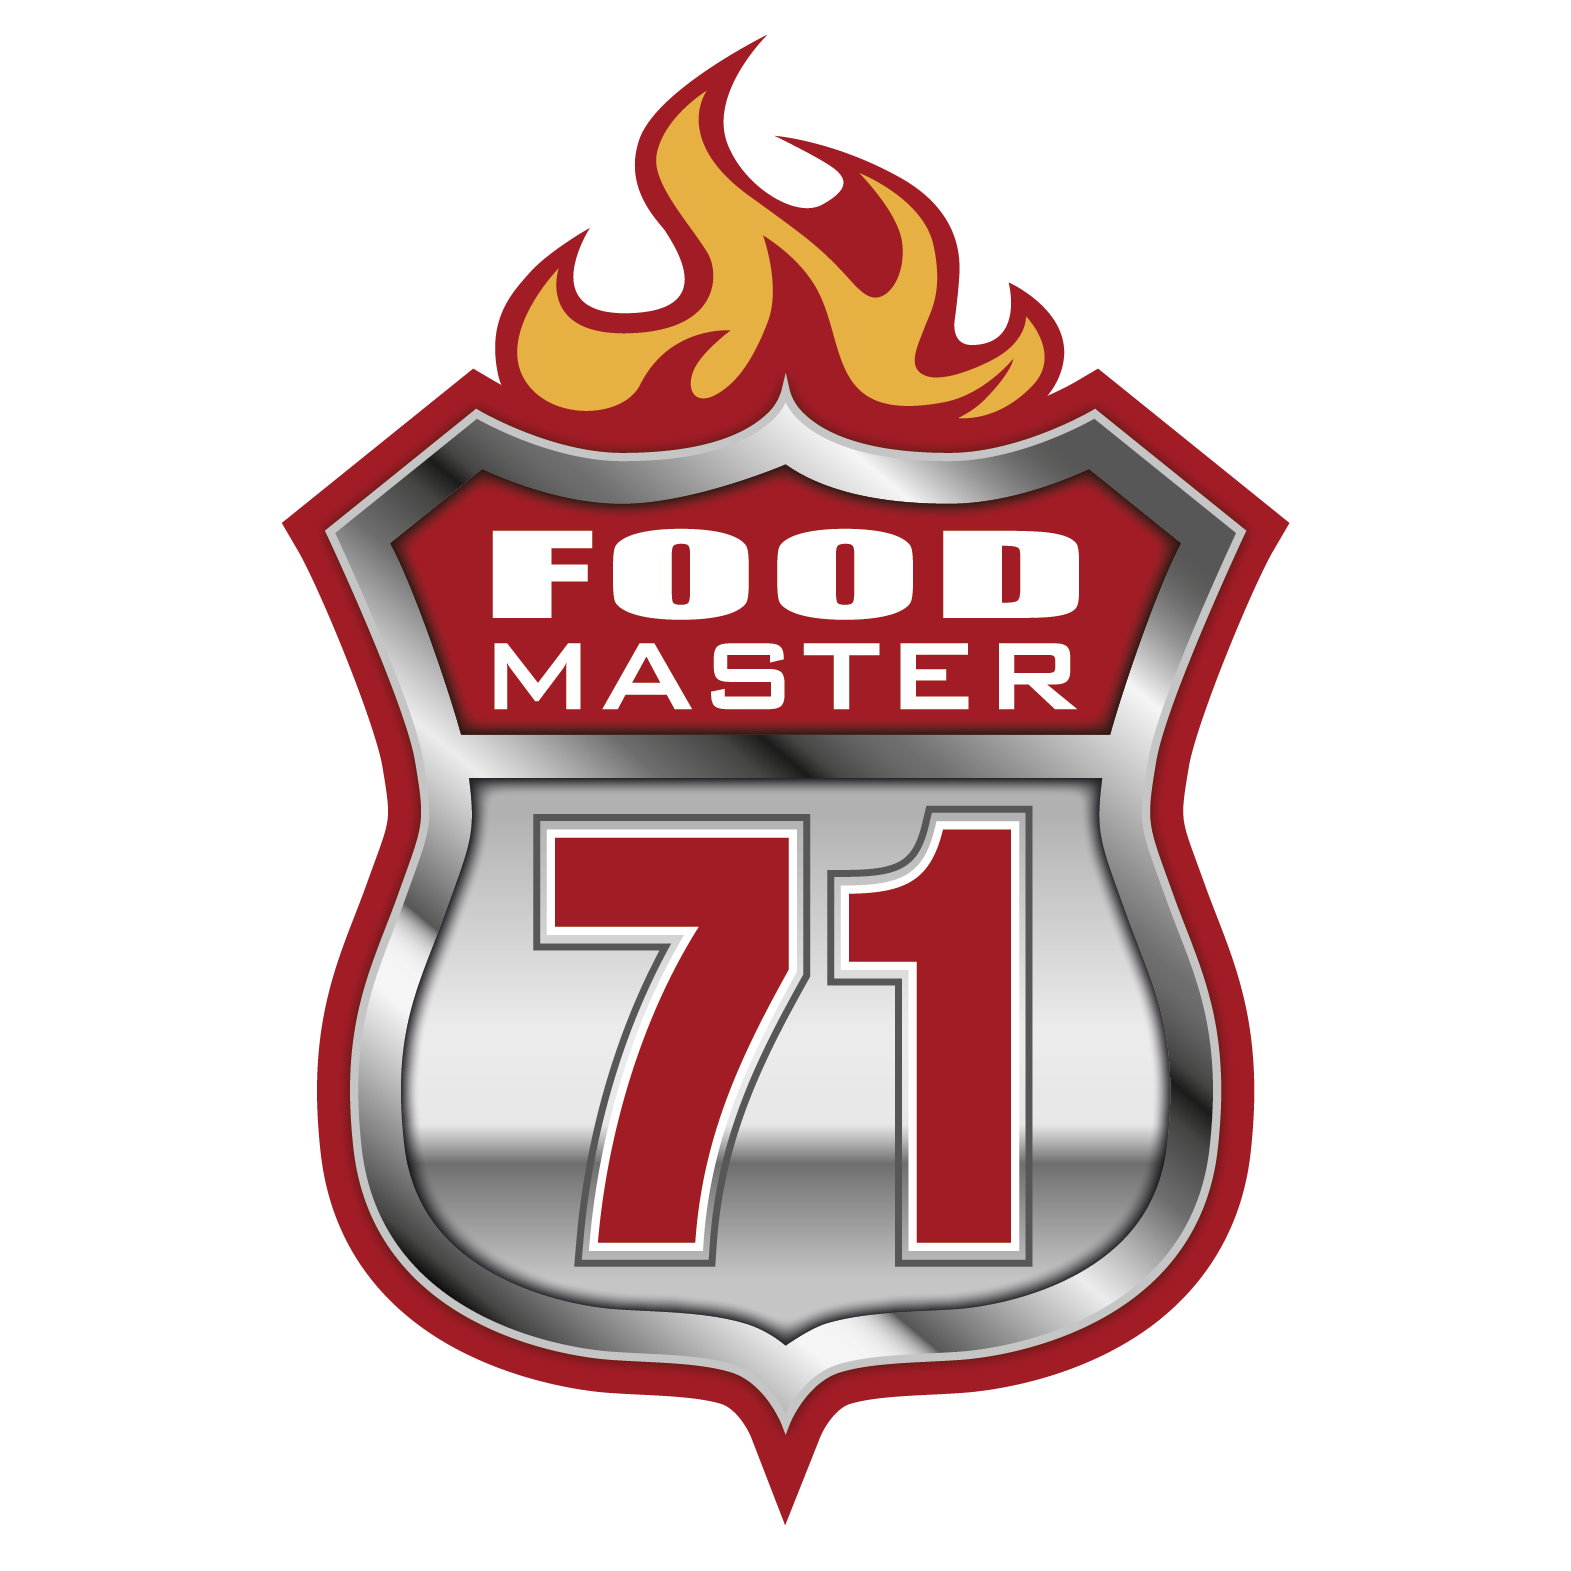 FOODMASTER71 Logo